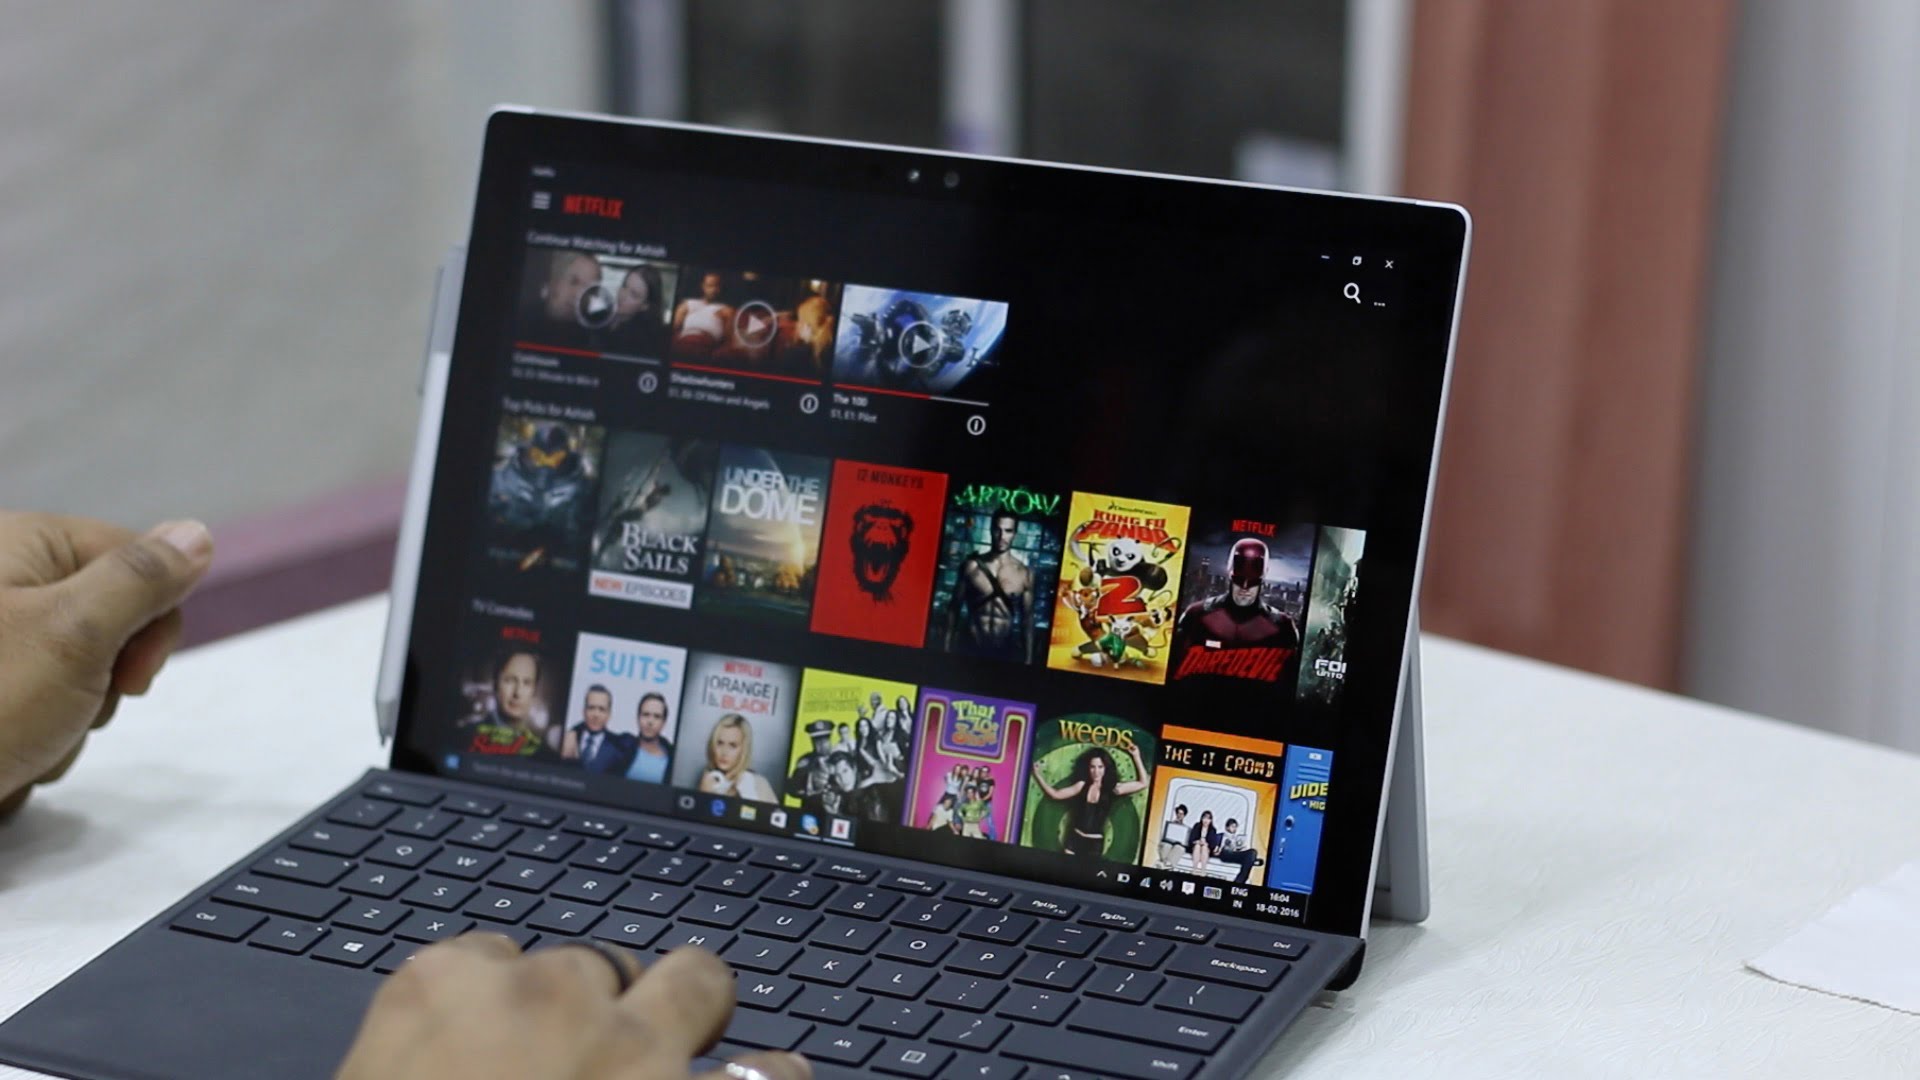 Surface Pro 4 Display Netflix